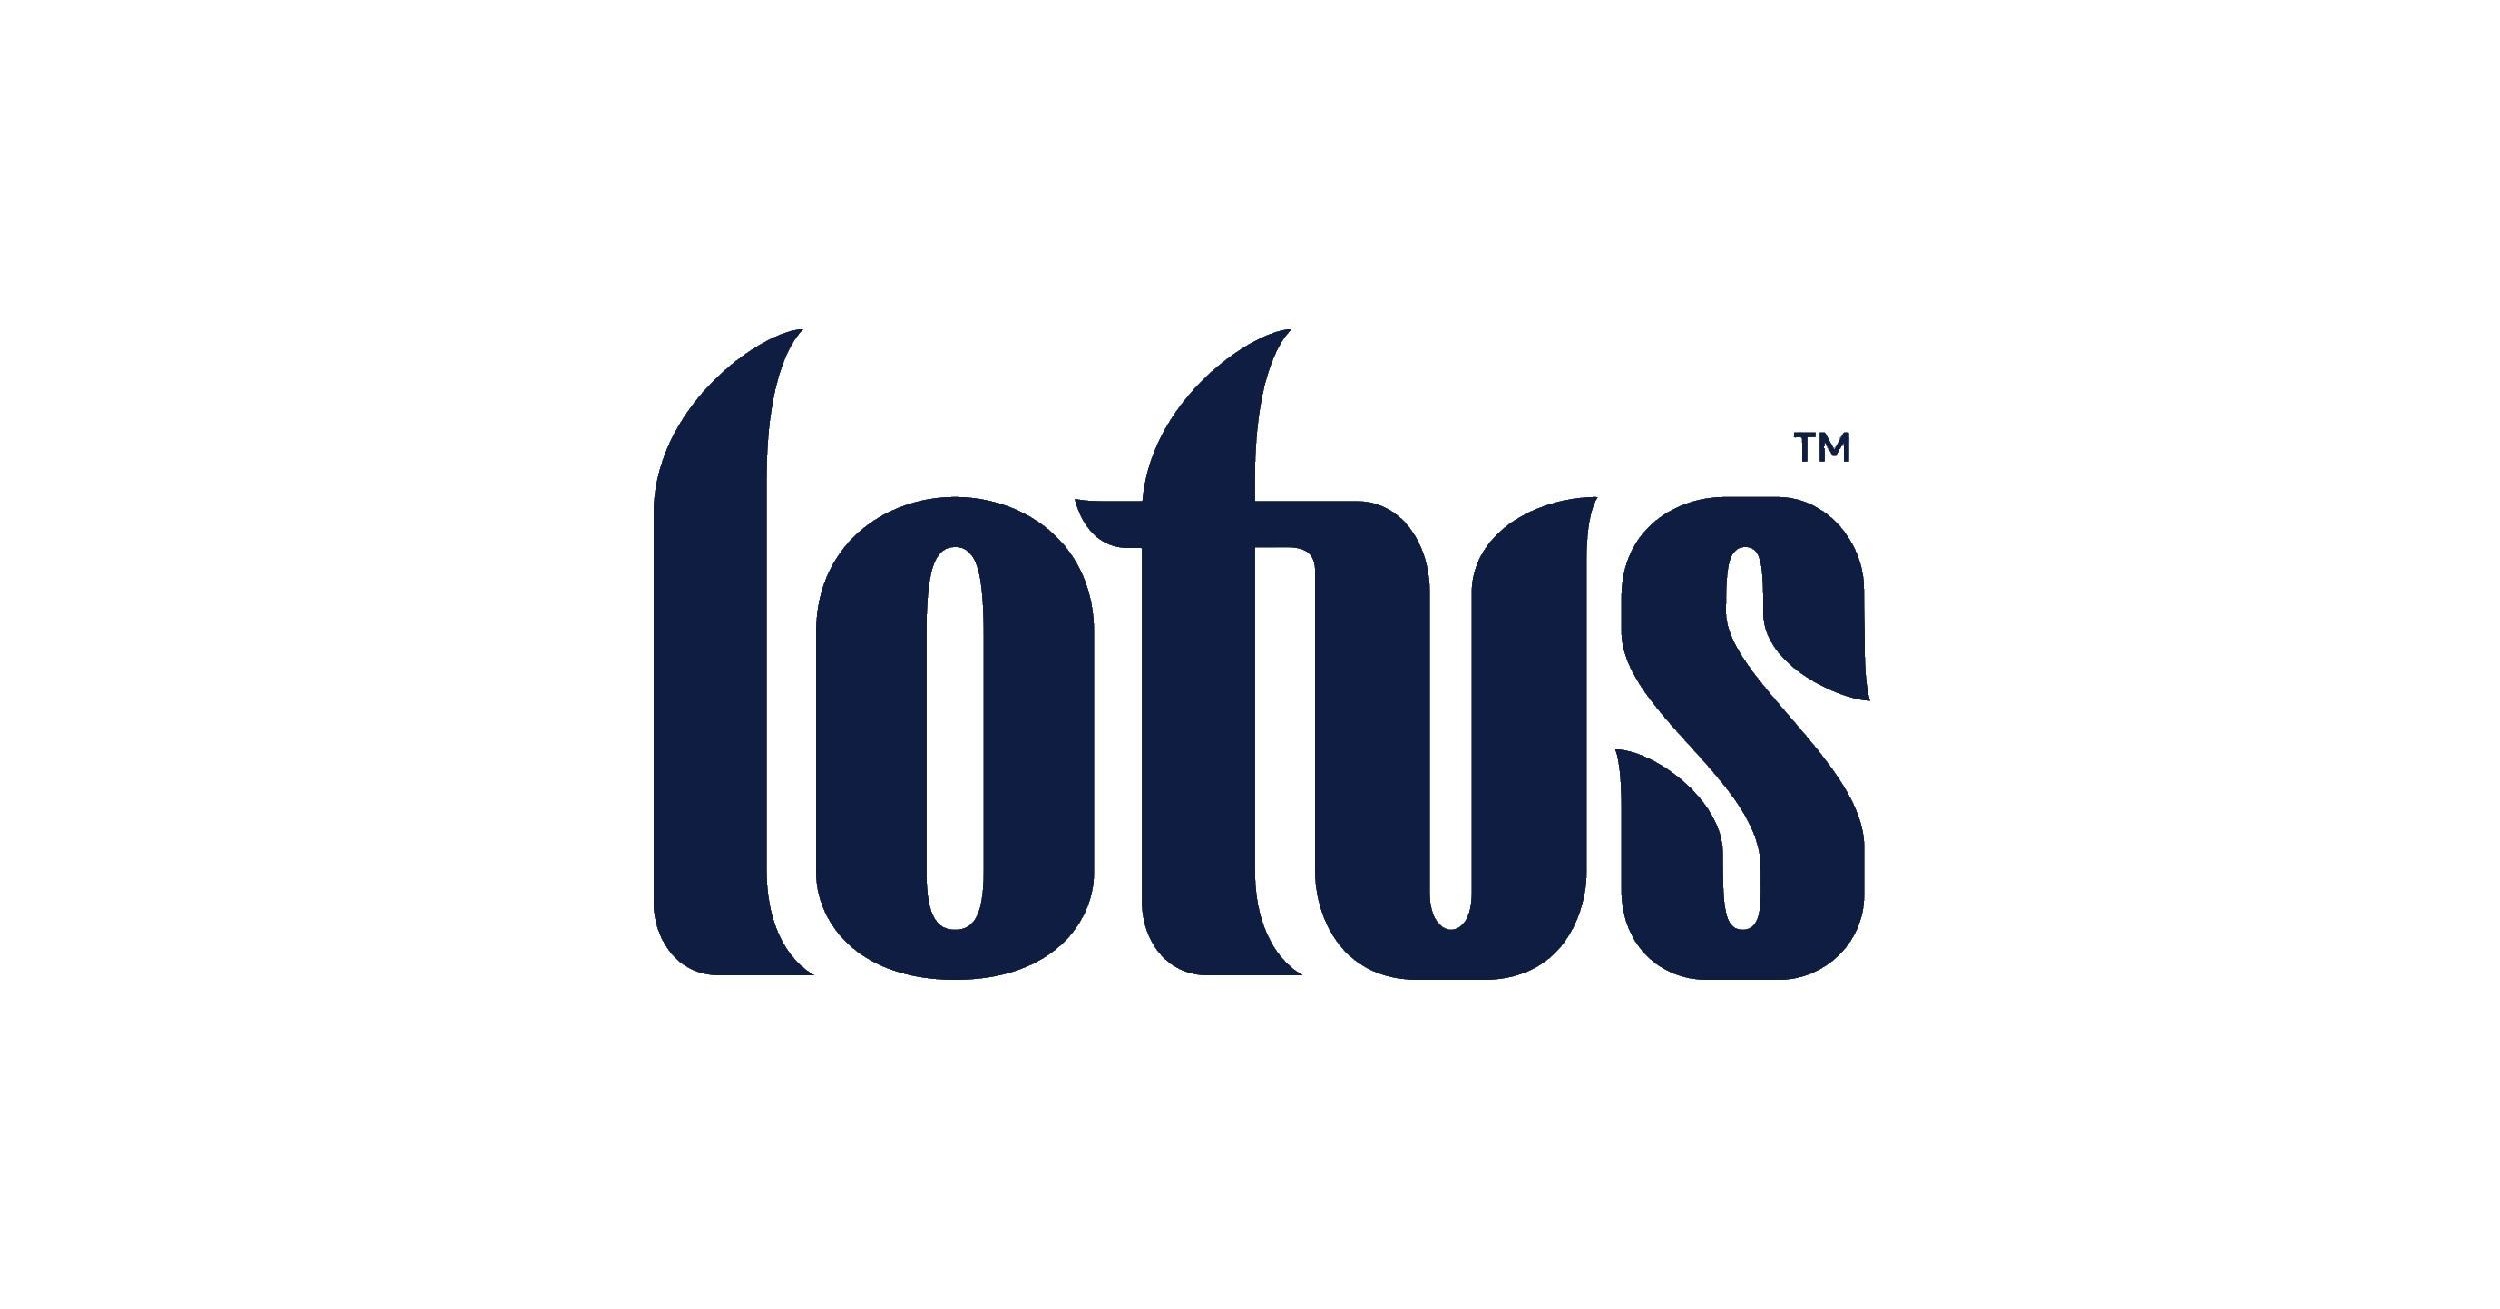 Lotus Ventures Provides Operational Update for Investors